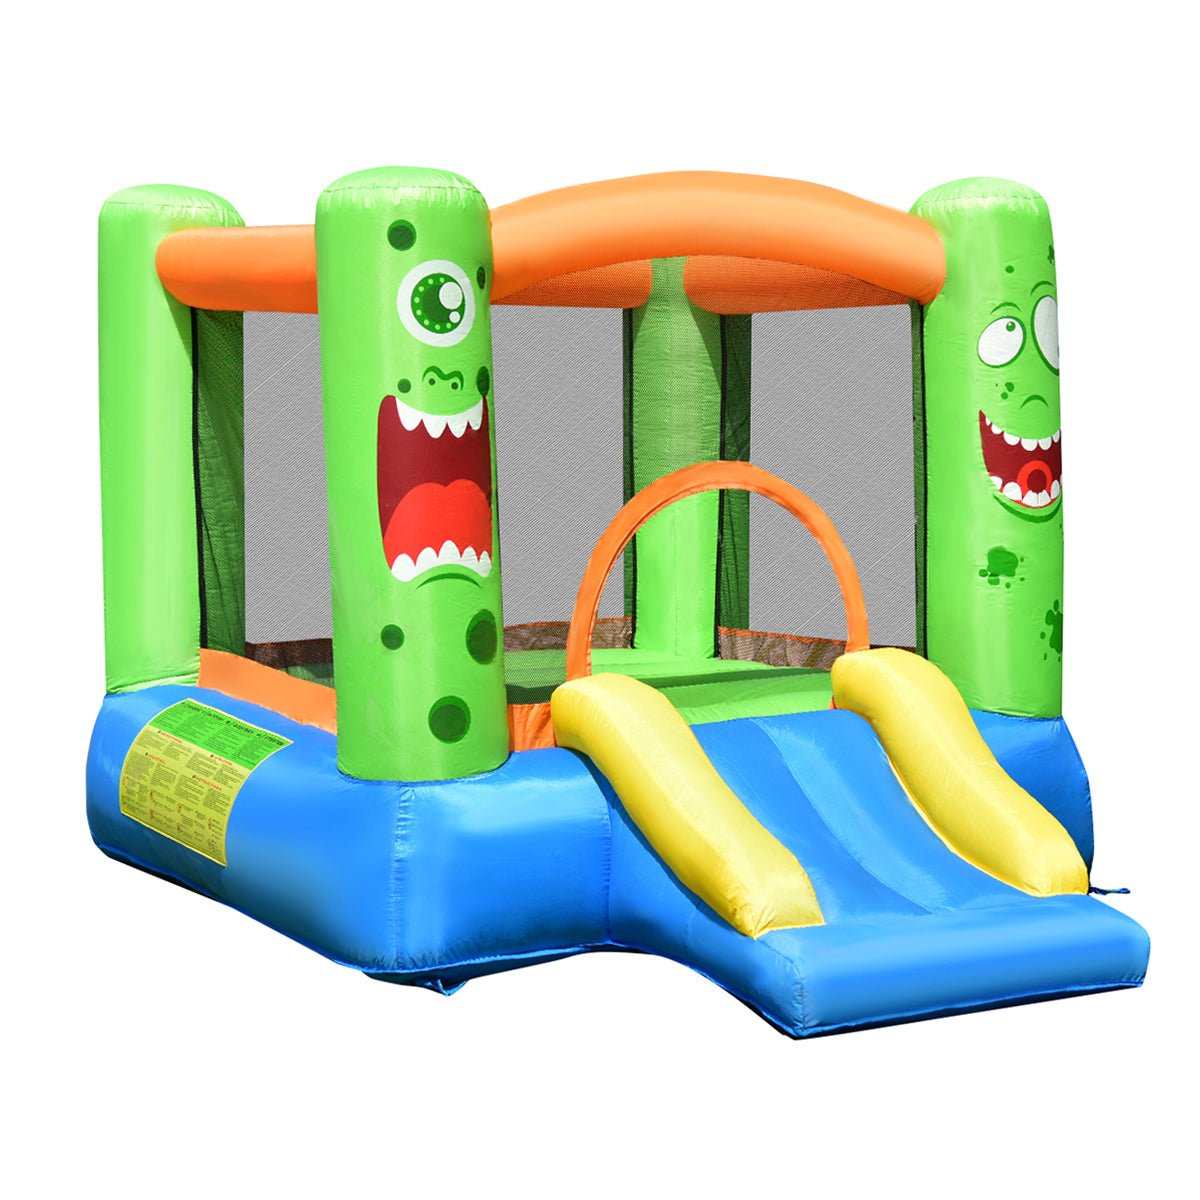 Children's Bounce Castle - Slide, Basketball Hoop, and Playful Adventure